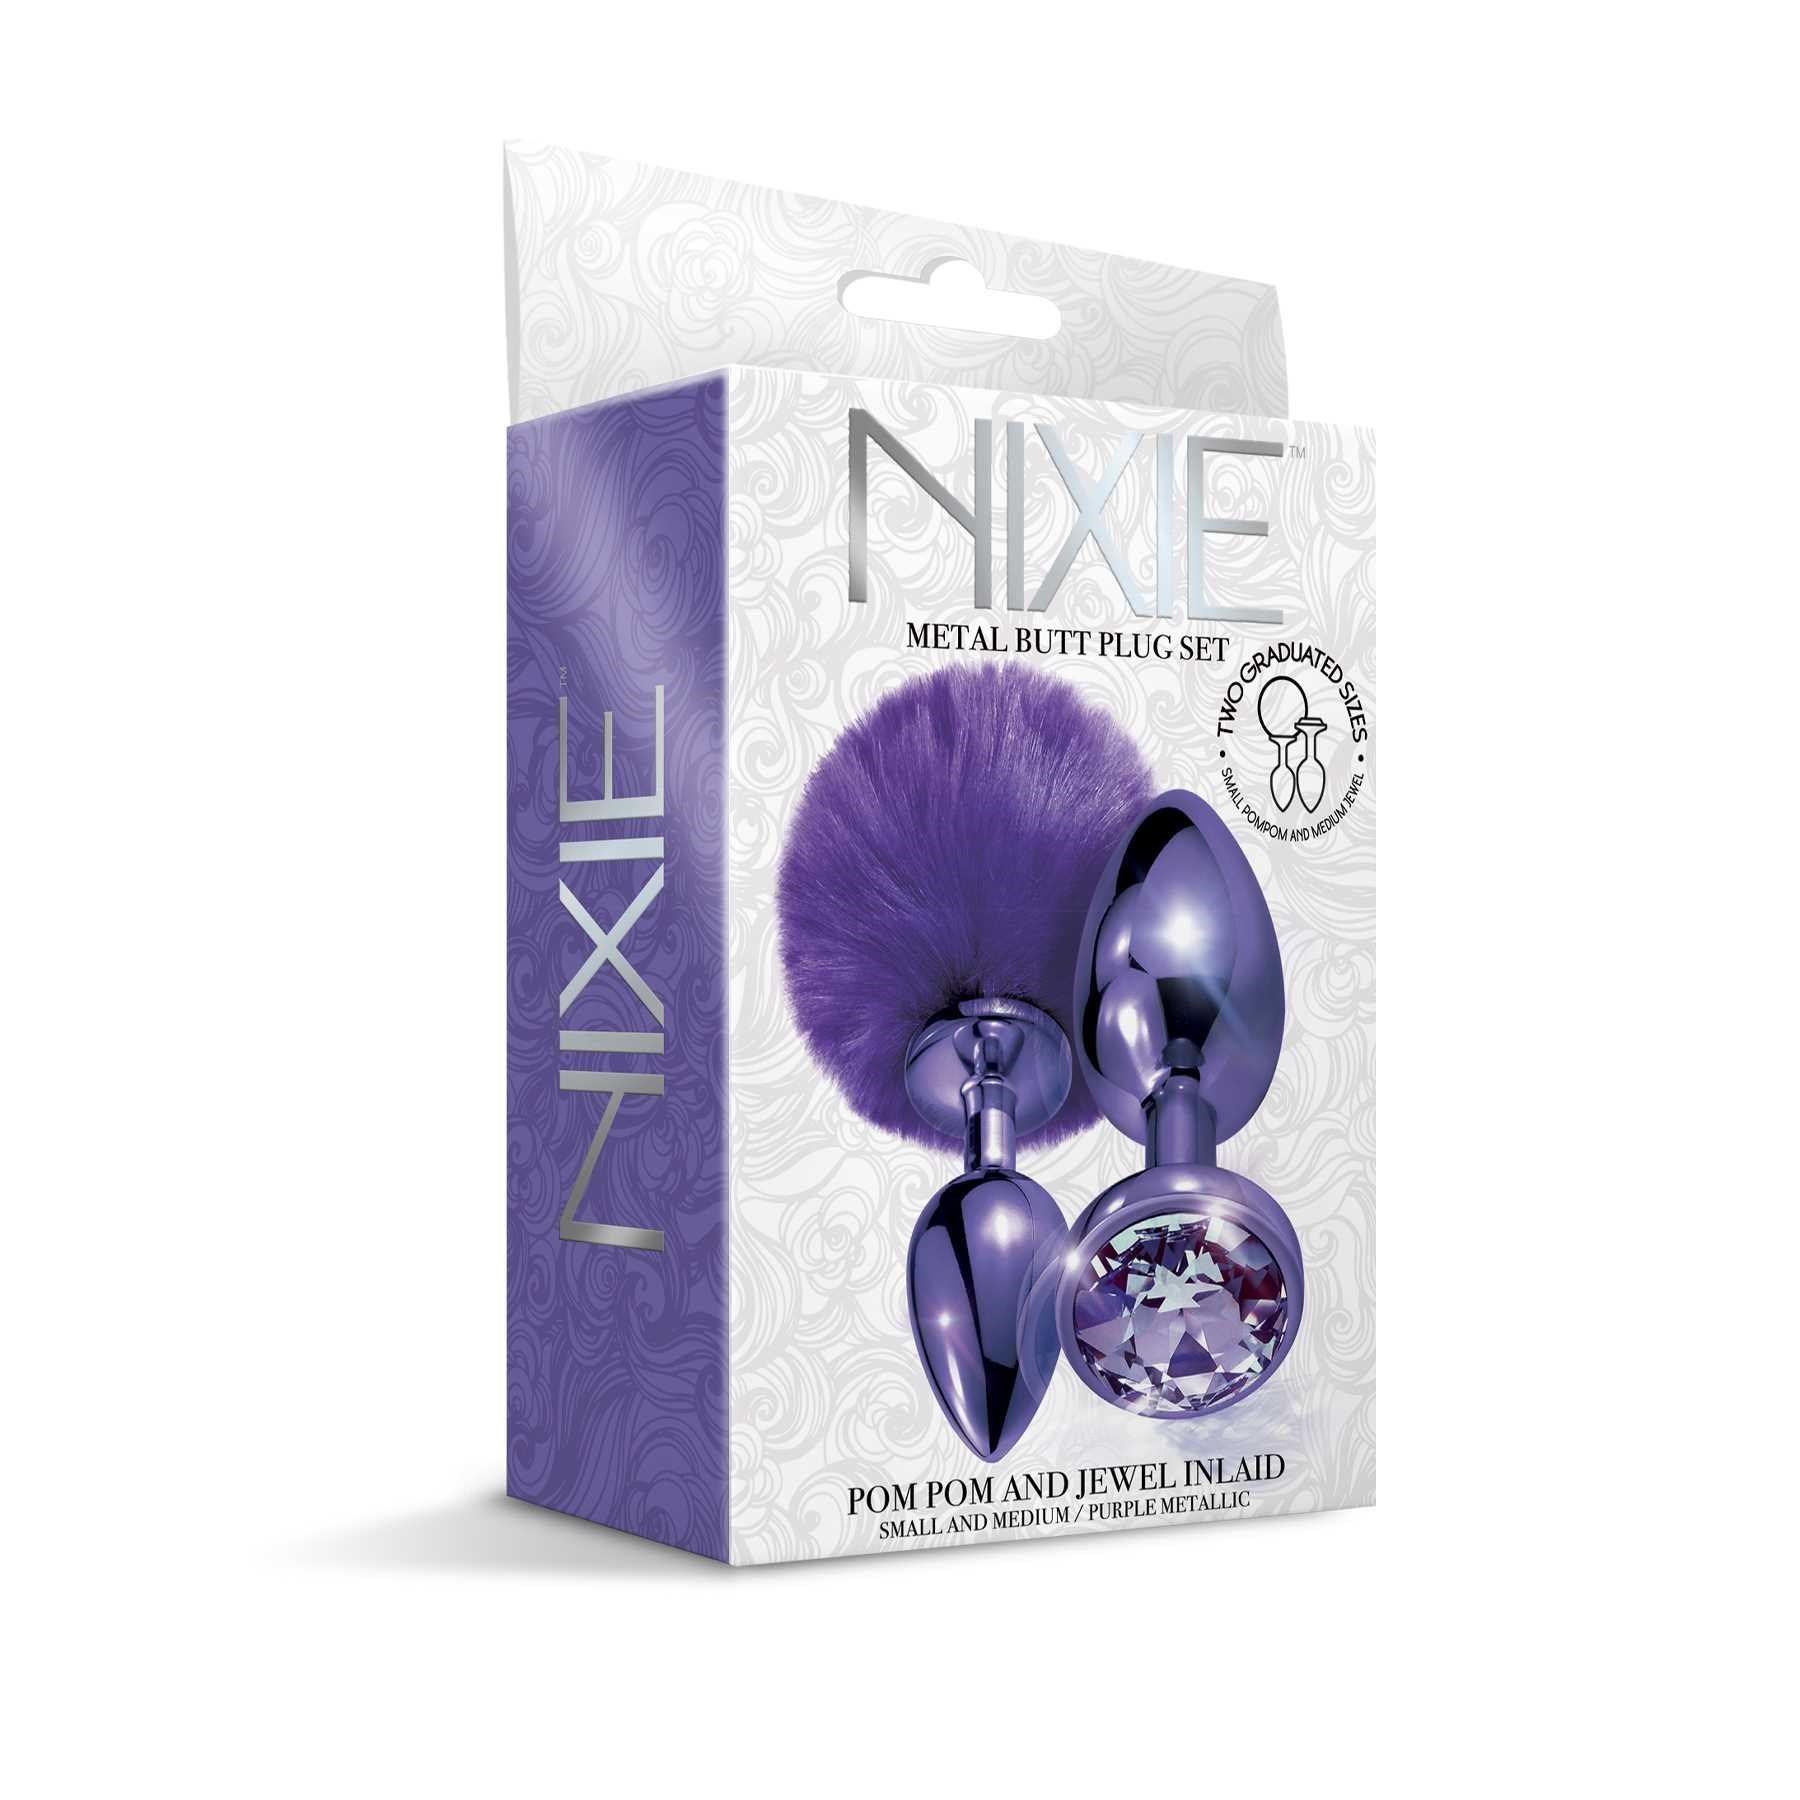 NIXIE Metal Butt Plug Set Pom Pom and Jewel Inlaid Metallic purple